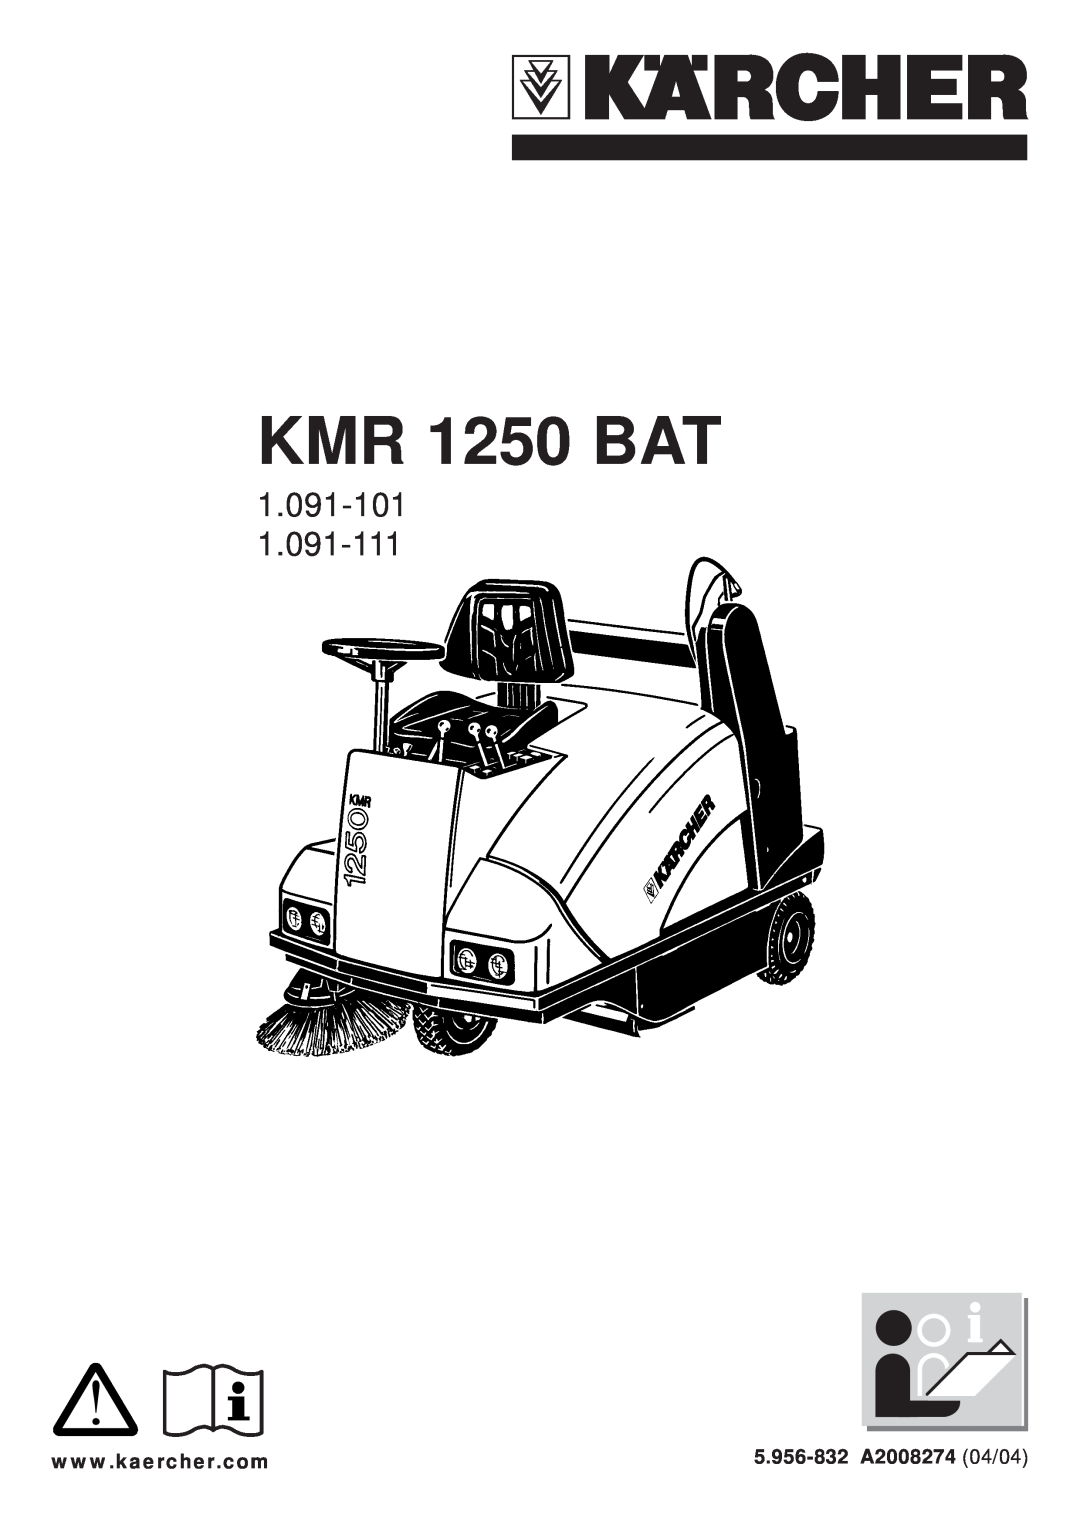 Karcher KMR 1250 BAT manual 1.091-101, 5.956-832 A2008274 04/04 